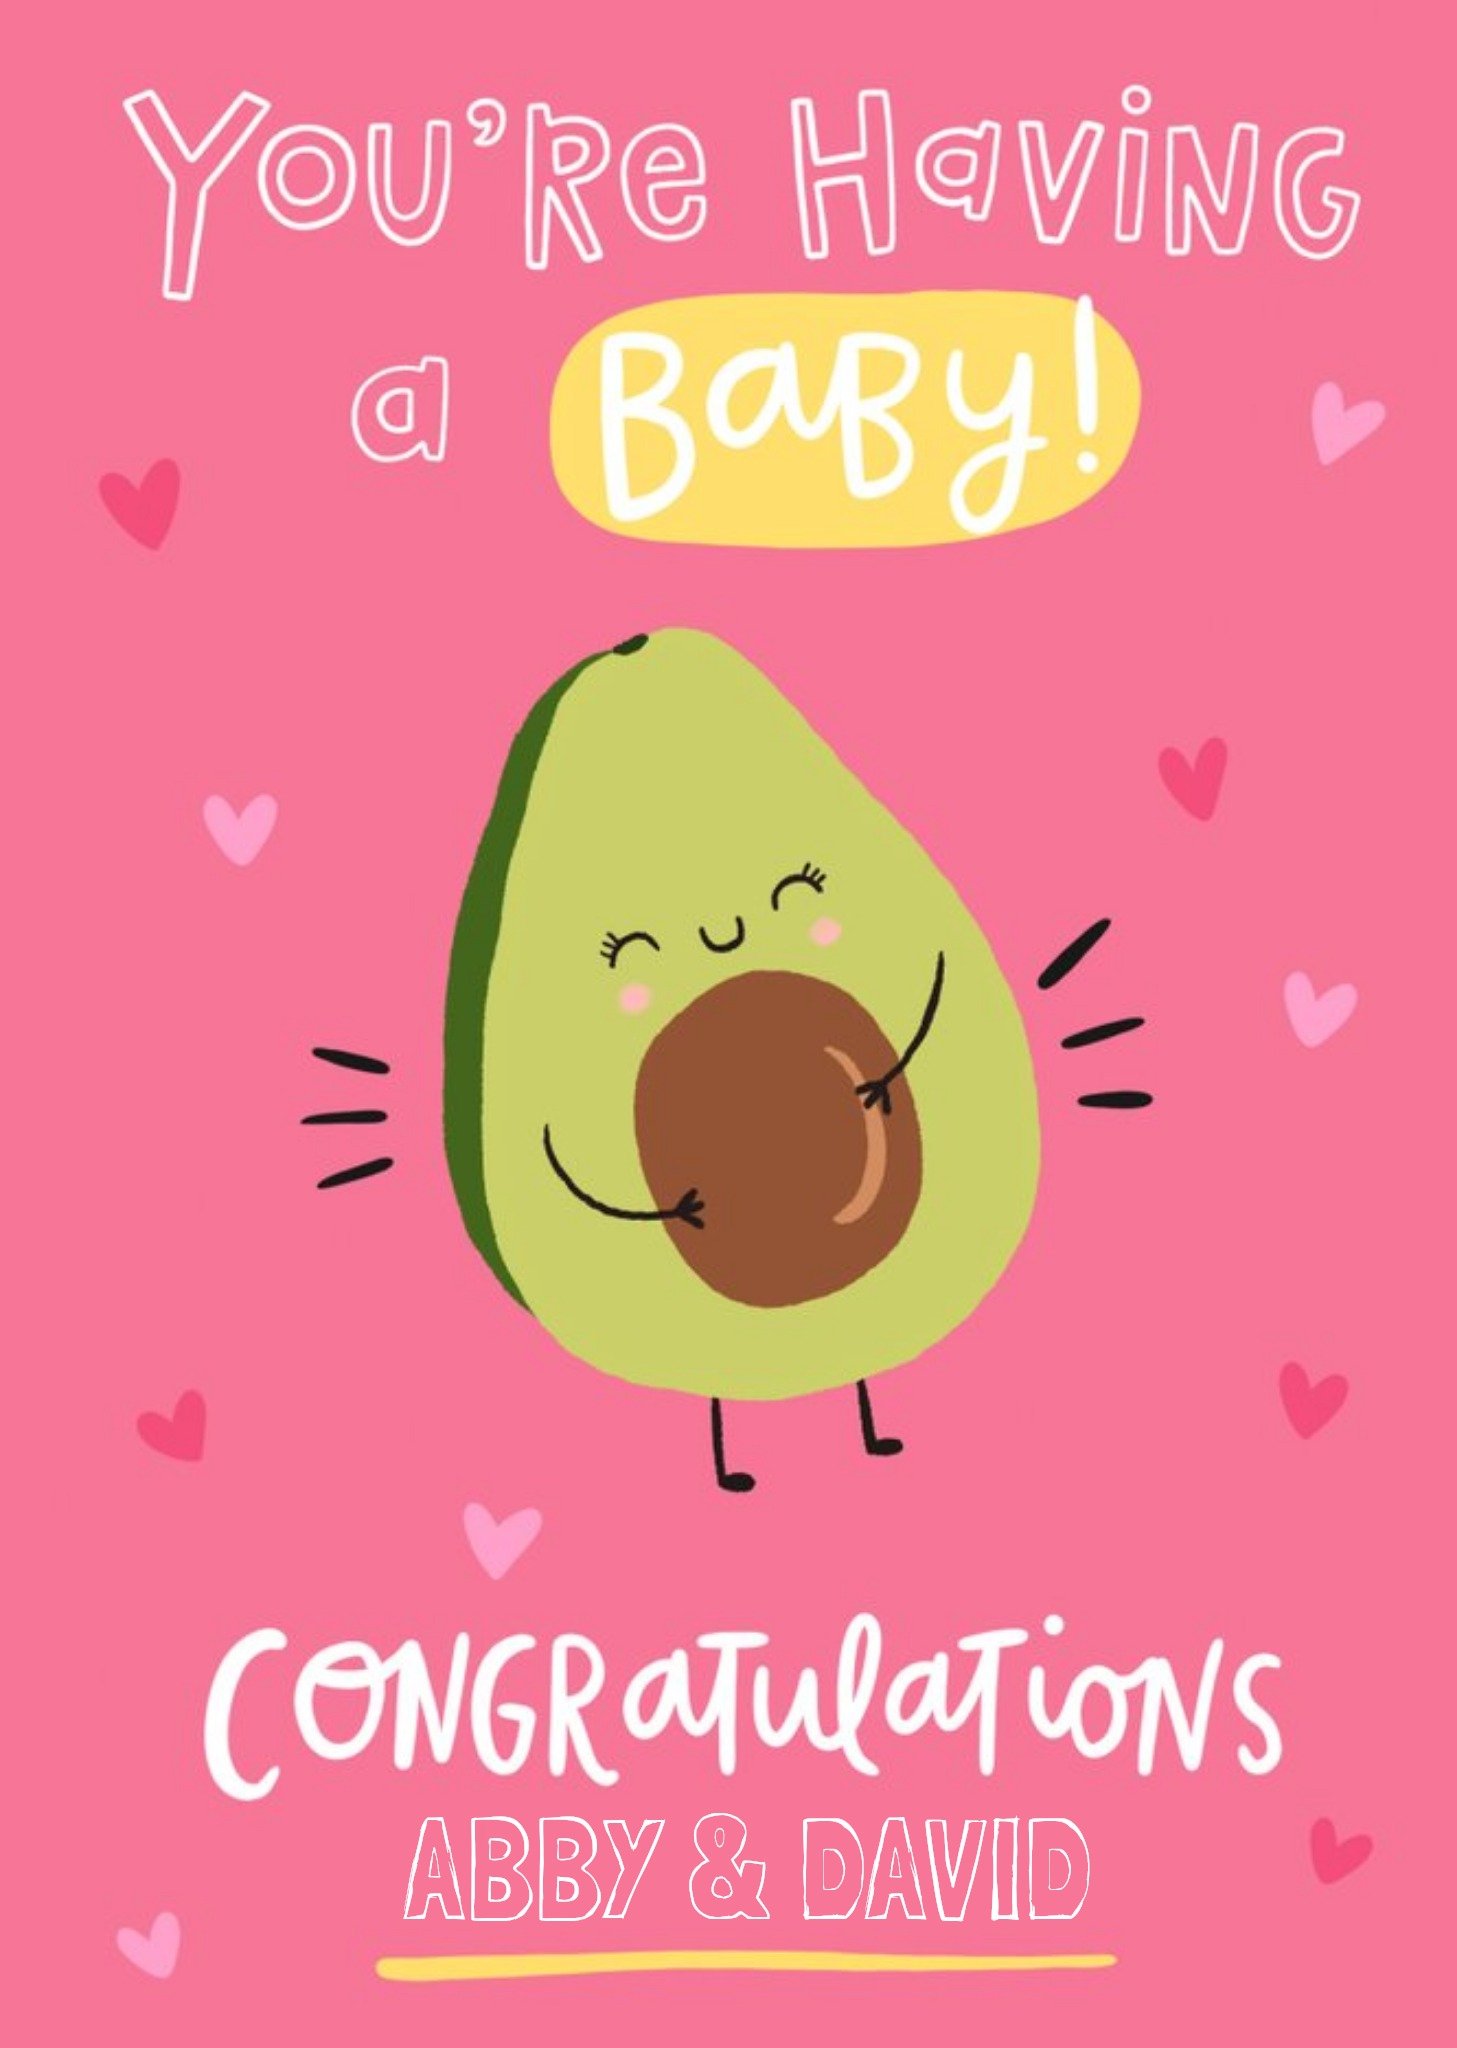 Moonpig Bright Fun Illustration Of An Avocado You're Having A Baby Congratulations Card, Large